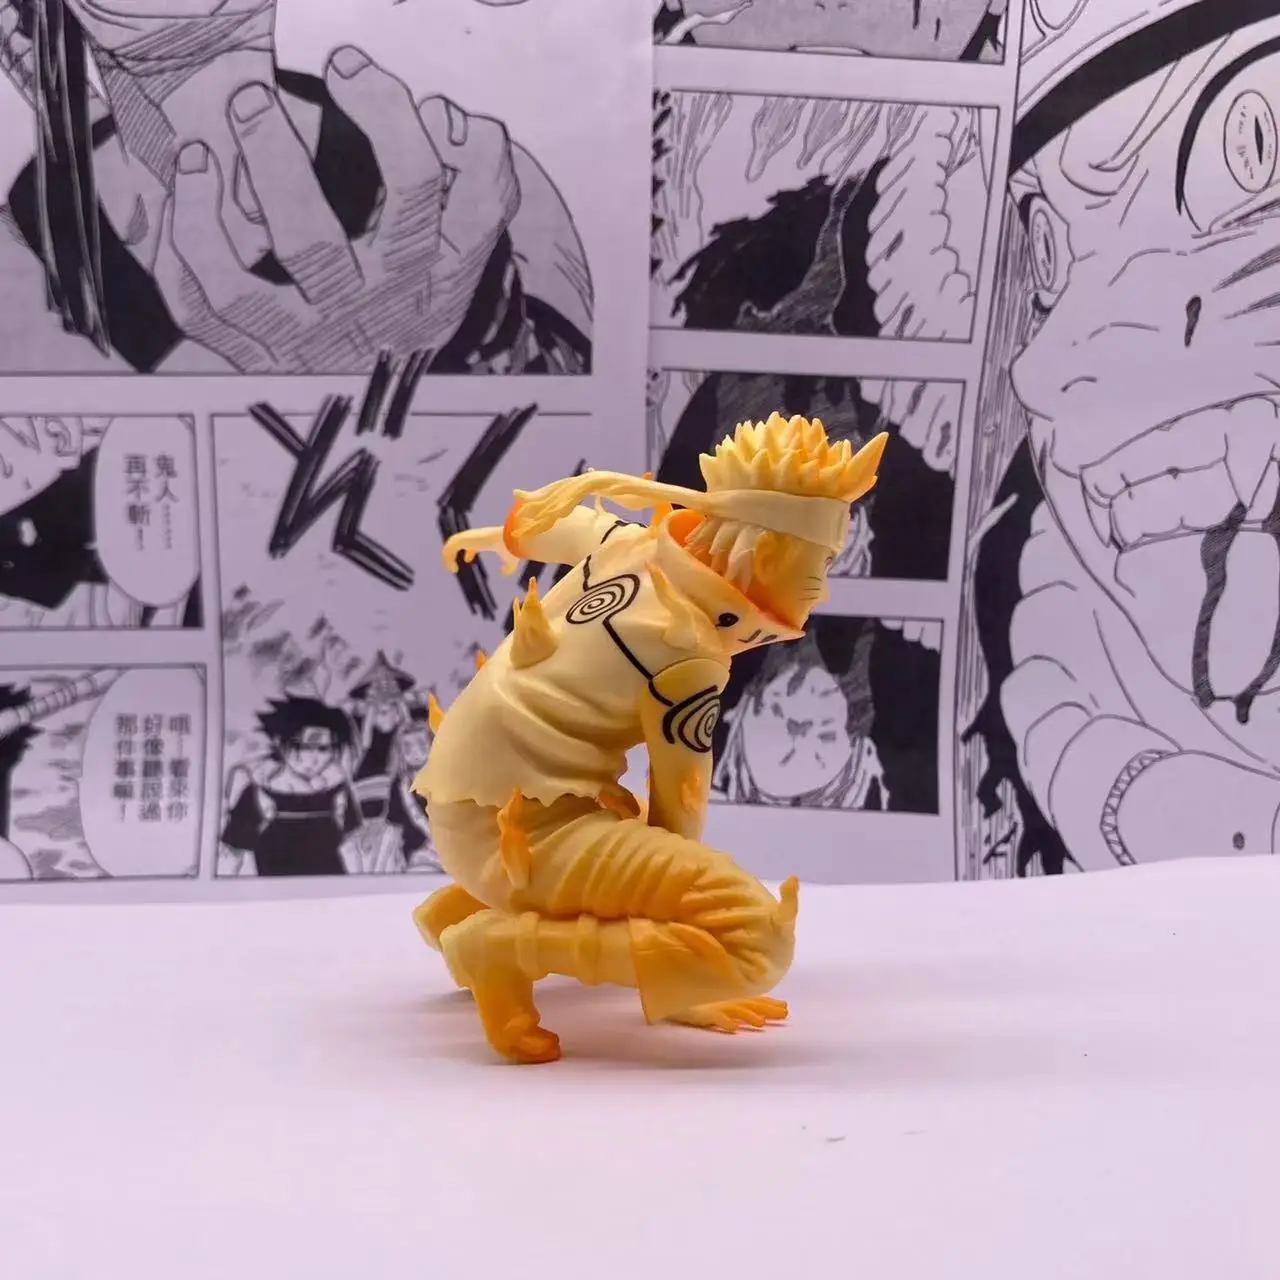 Panel Asli Tontonan Naruto Action Figure Model Mainan Anime Figuralscar Konsol Tengah Ornamen Mainan Stand Kartu Kodok - 2